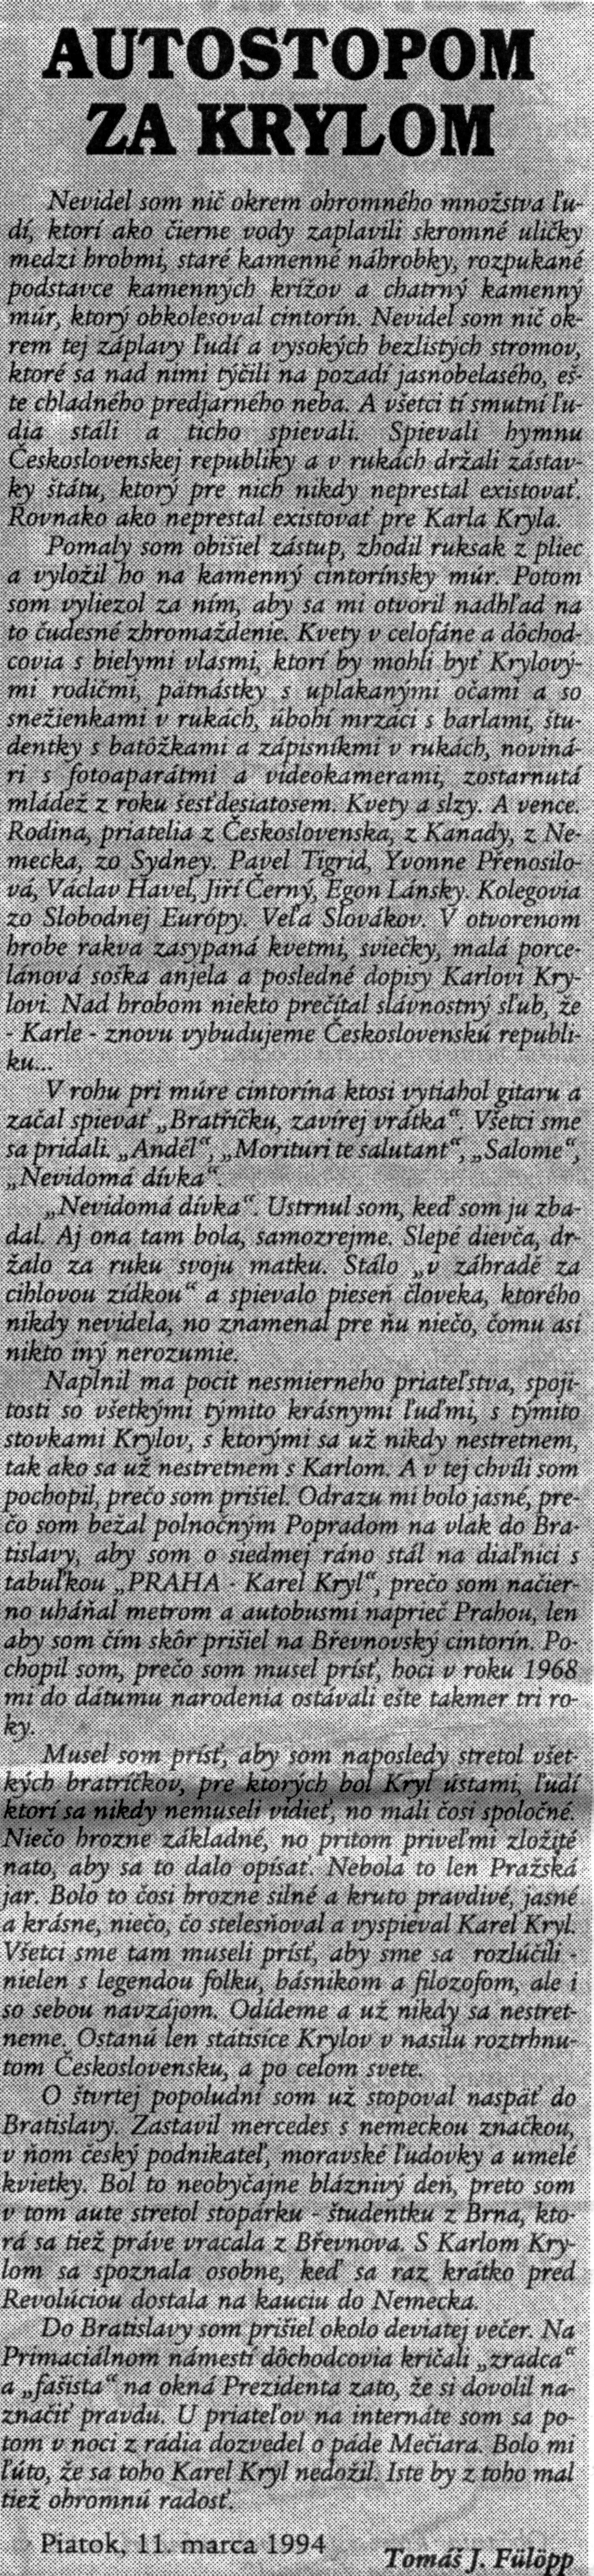 Autostopom za Krylom, Domino efekt, č. 11, 19940318, str. 9